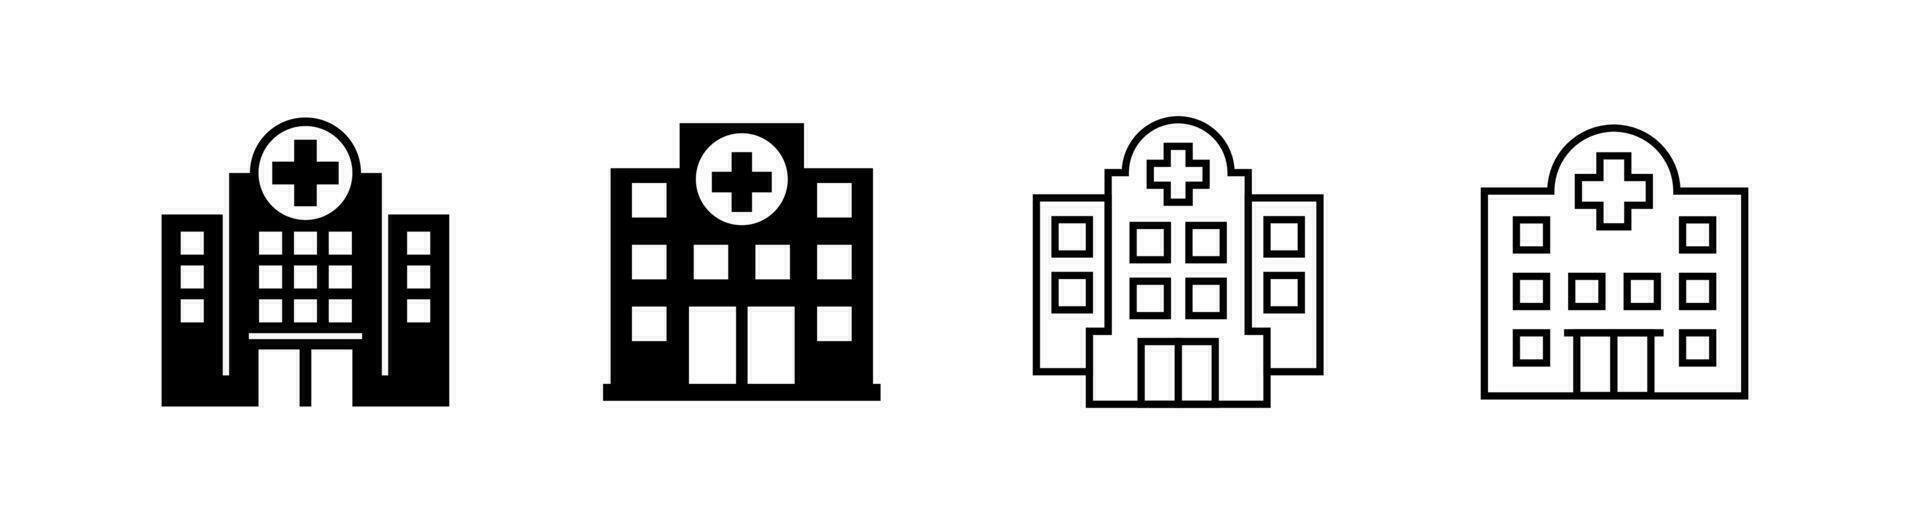 hospital icono conjunto de 4, diseño elemento adecuado para sitios web, impresión diseño o aplicación vector